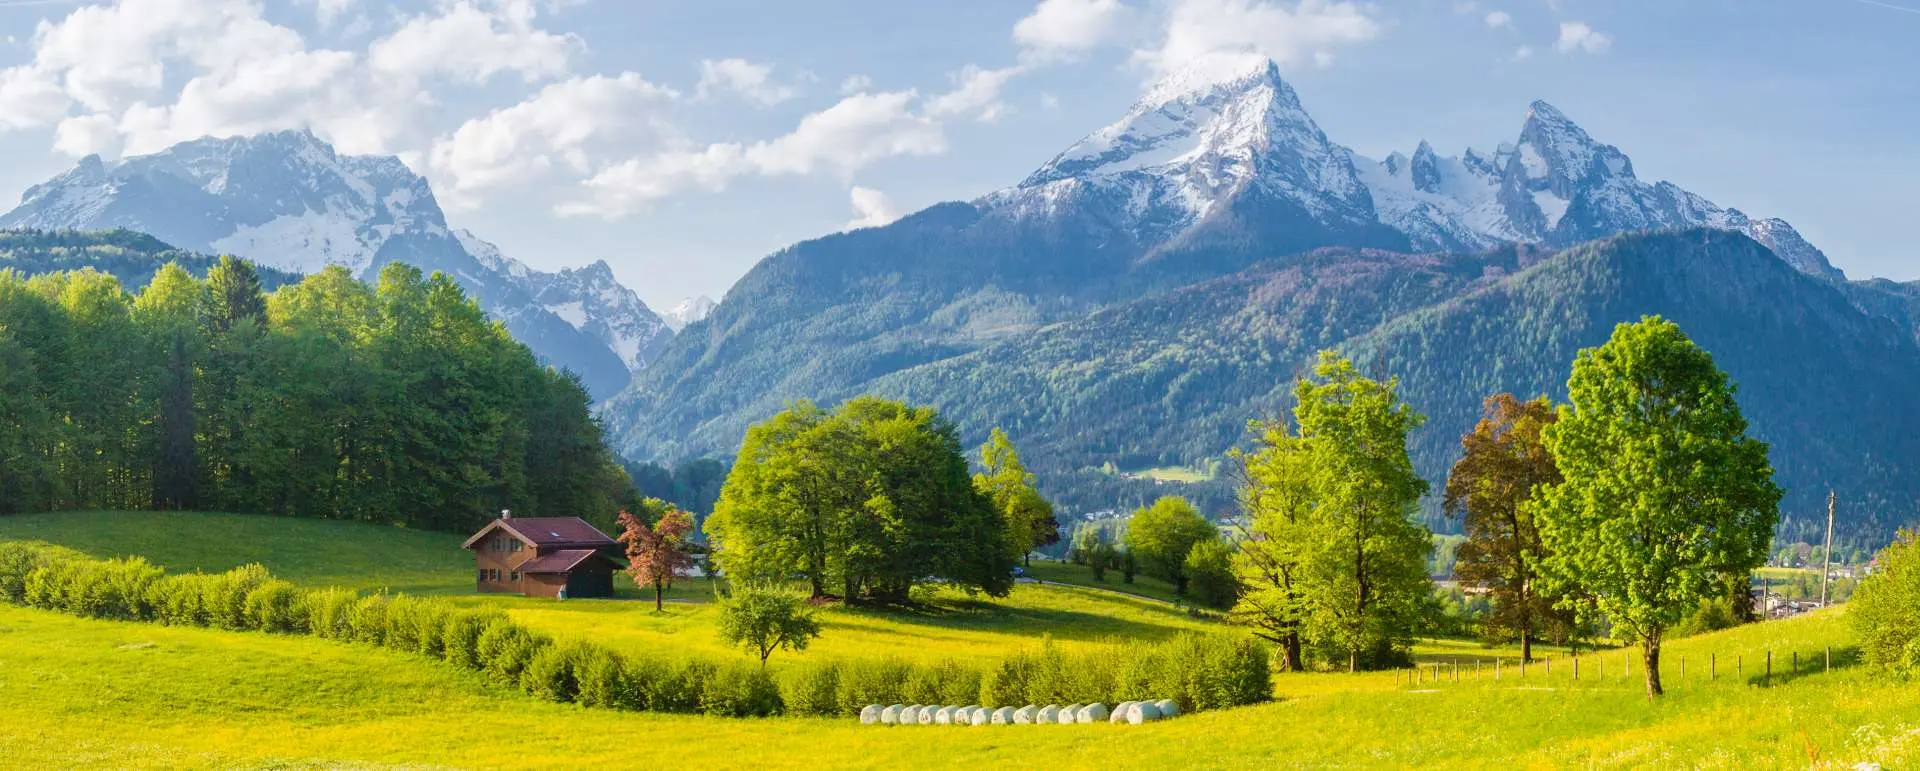 Berchtesgadener Land - the destination for groups